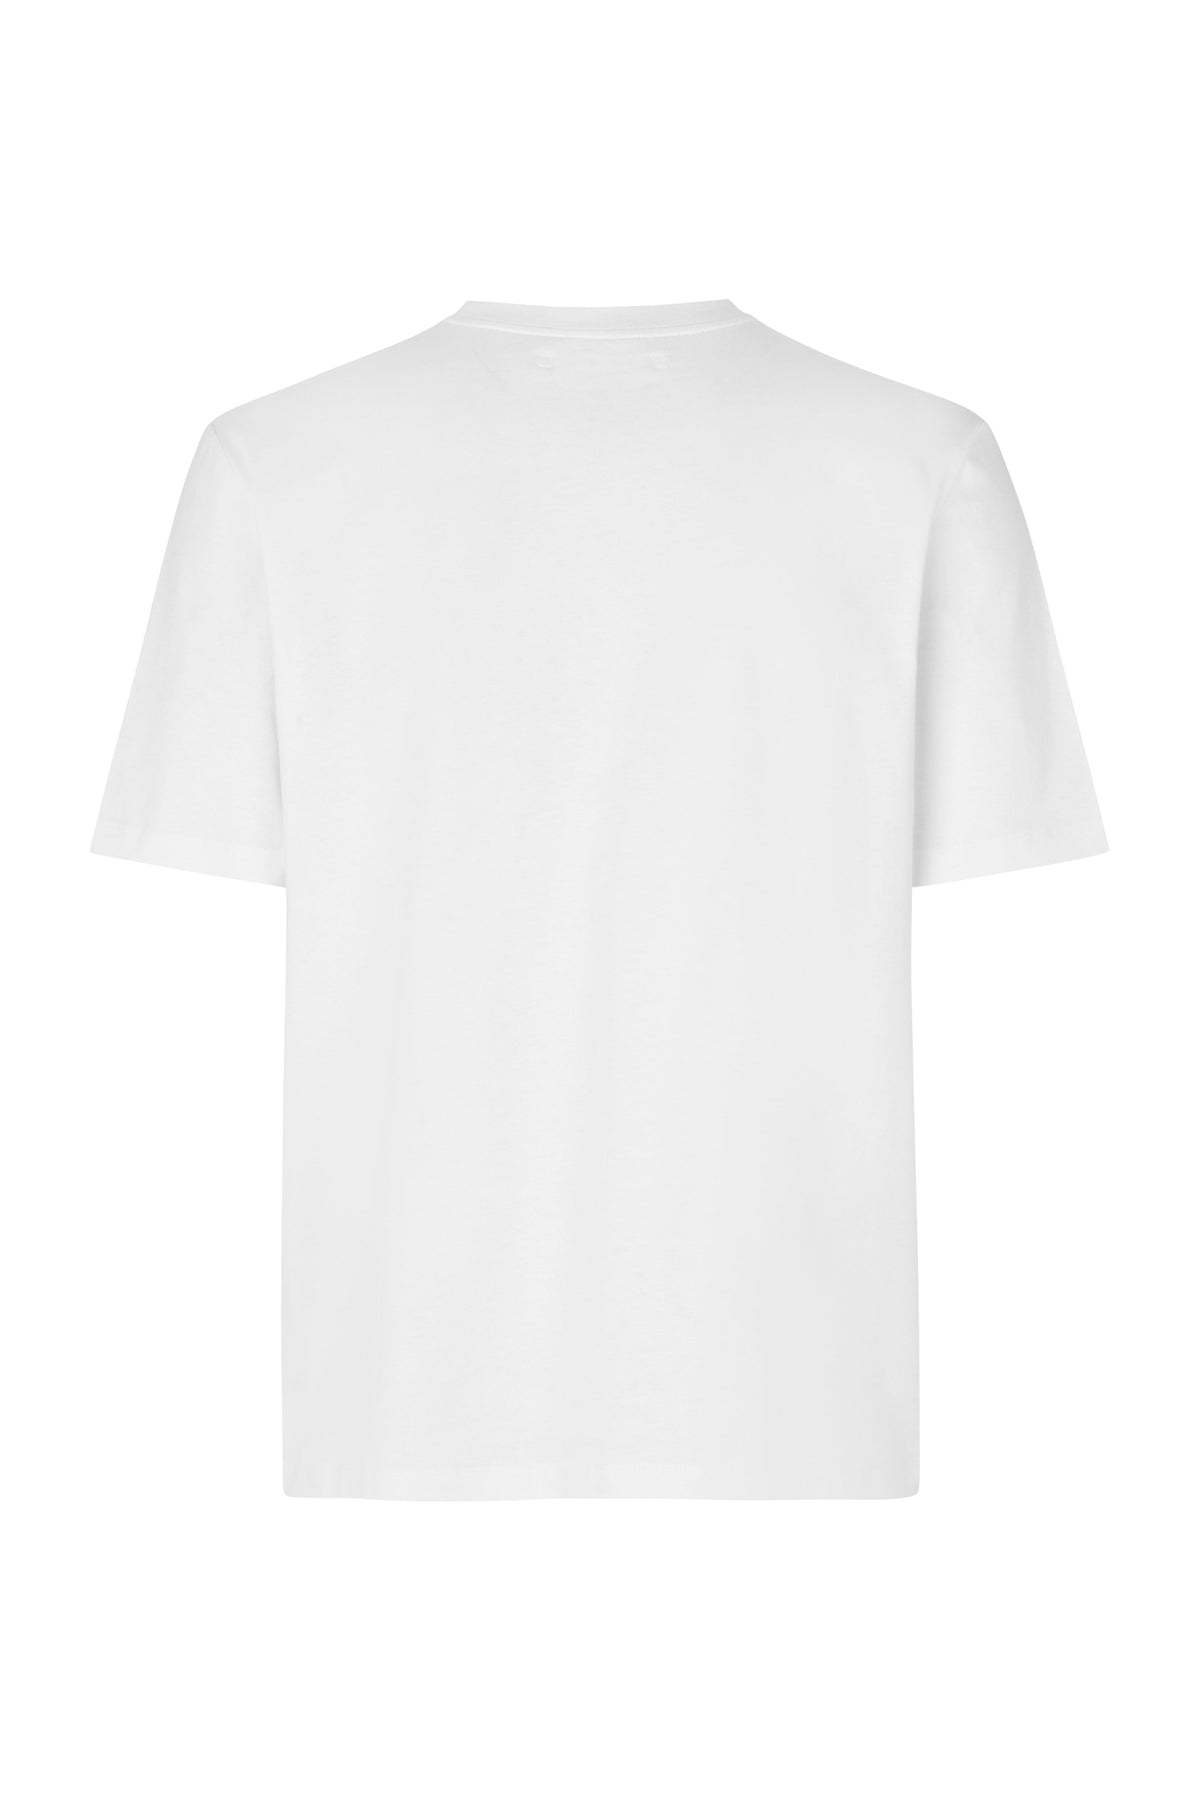 Chasing T-shirt 11415 - White